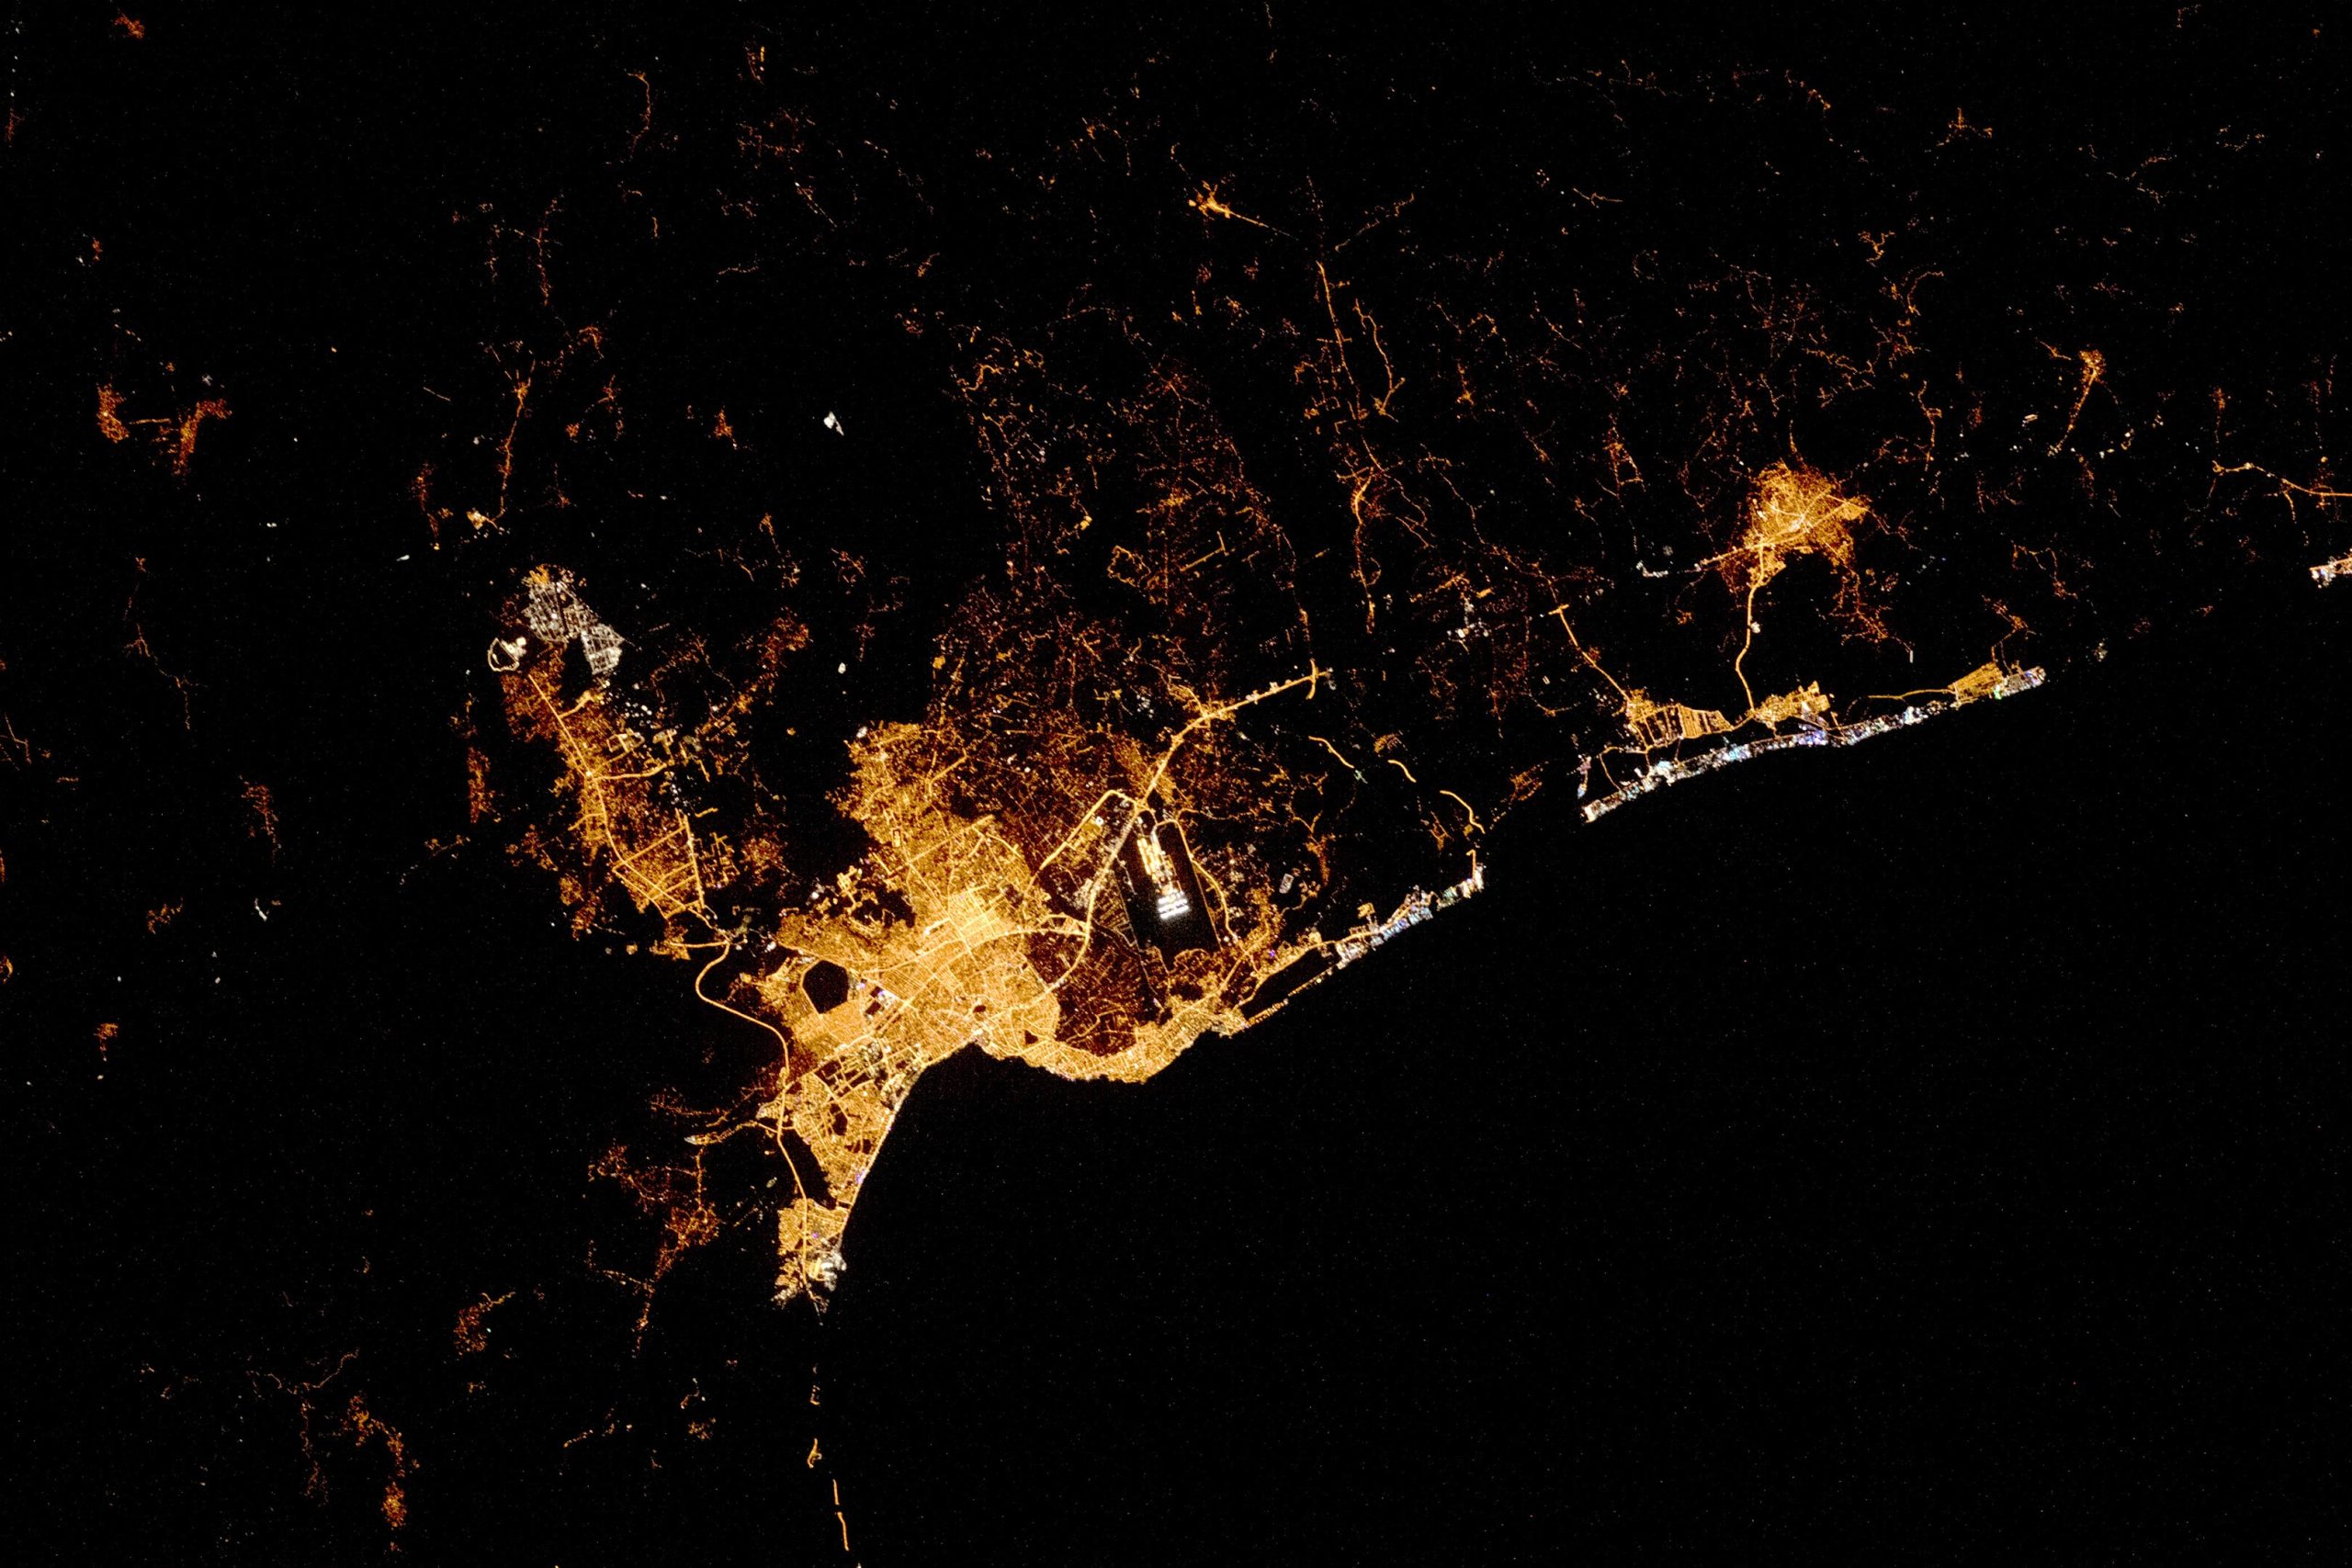 Astronaut’s Nighttime Odyssey: A Spectacular View of Antalya, Türkiye